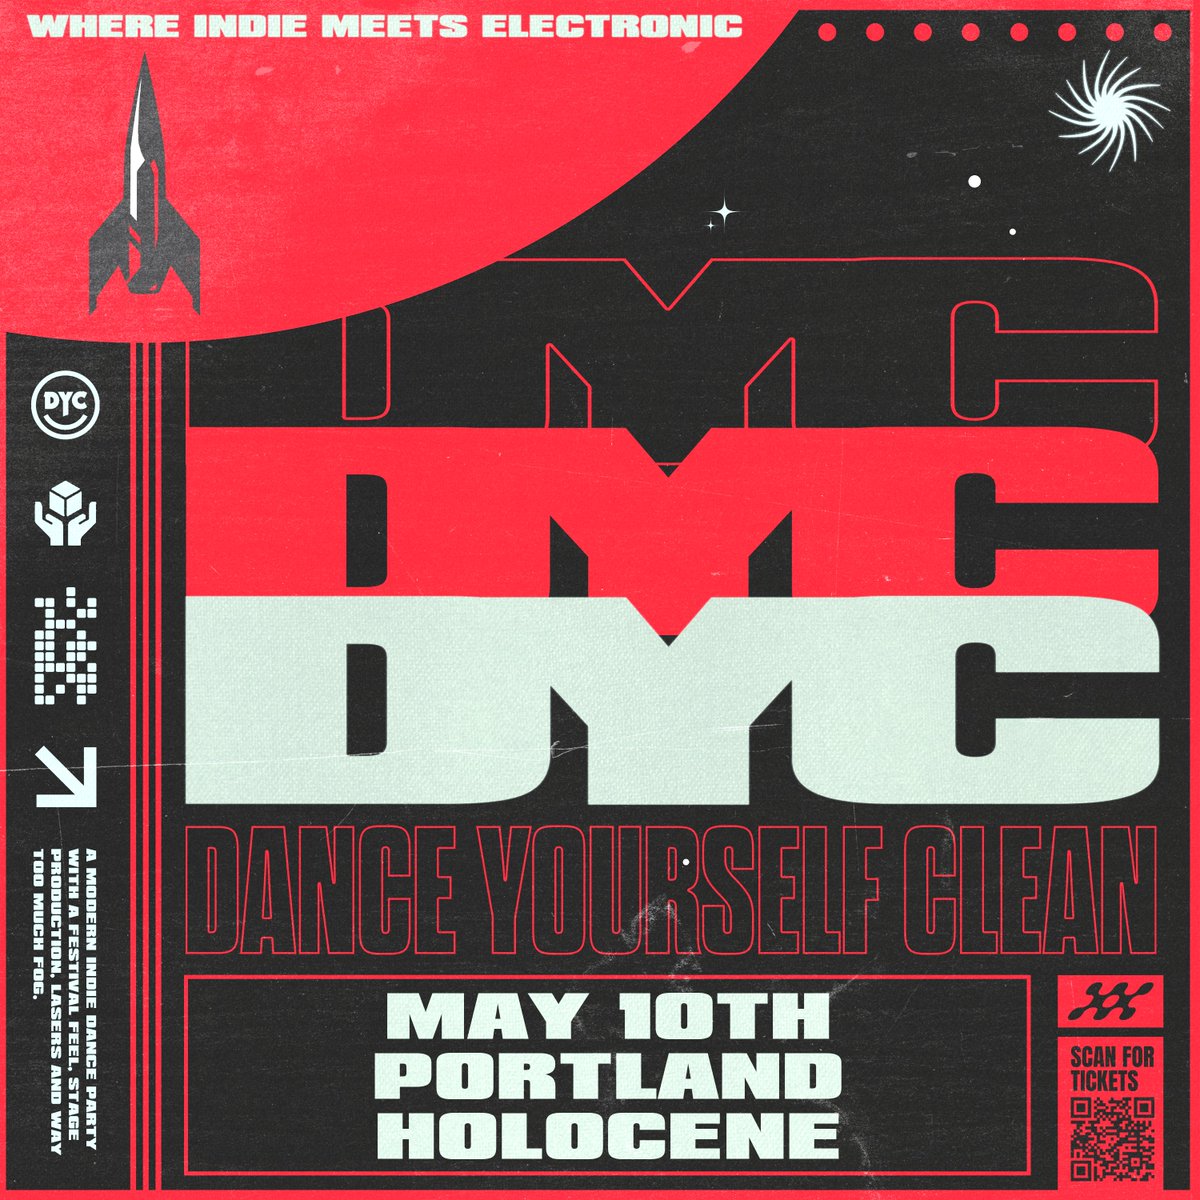 Portland tonight at @holocene Get tix: tinyurl.com/nhc3sabw